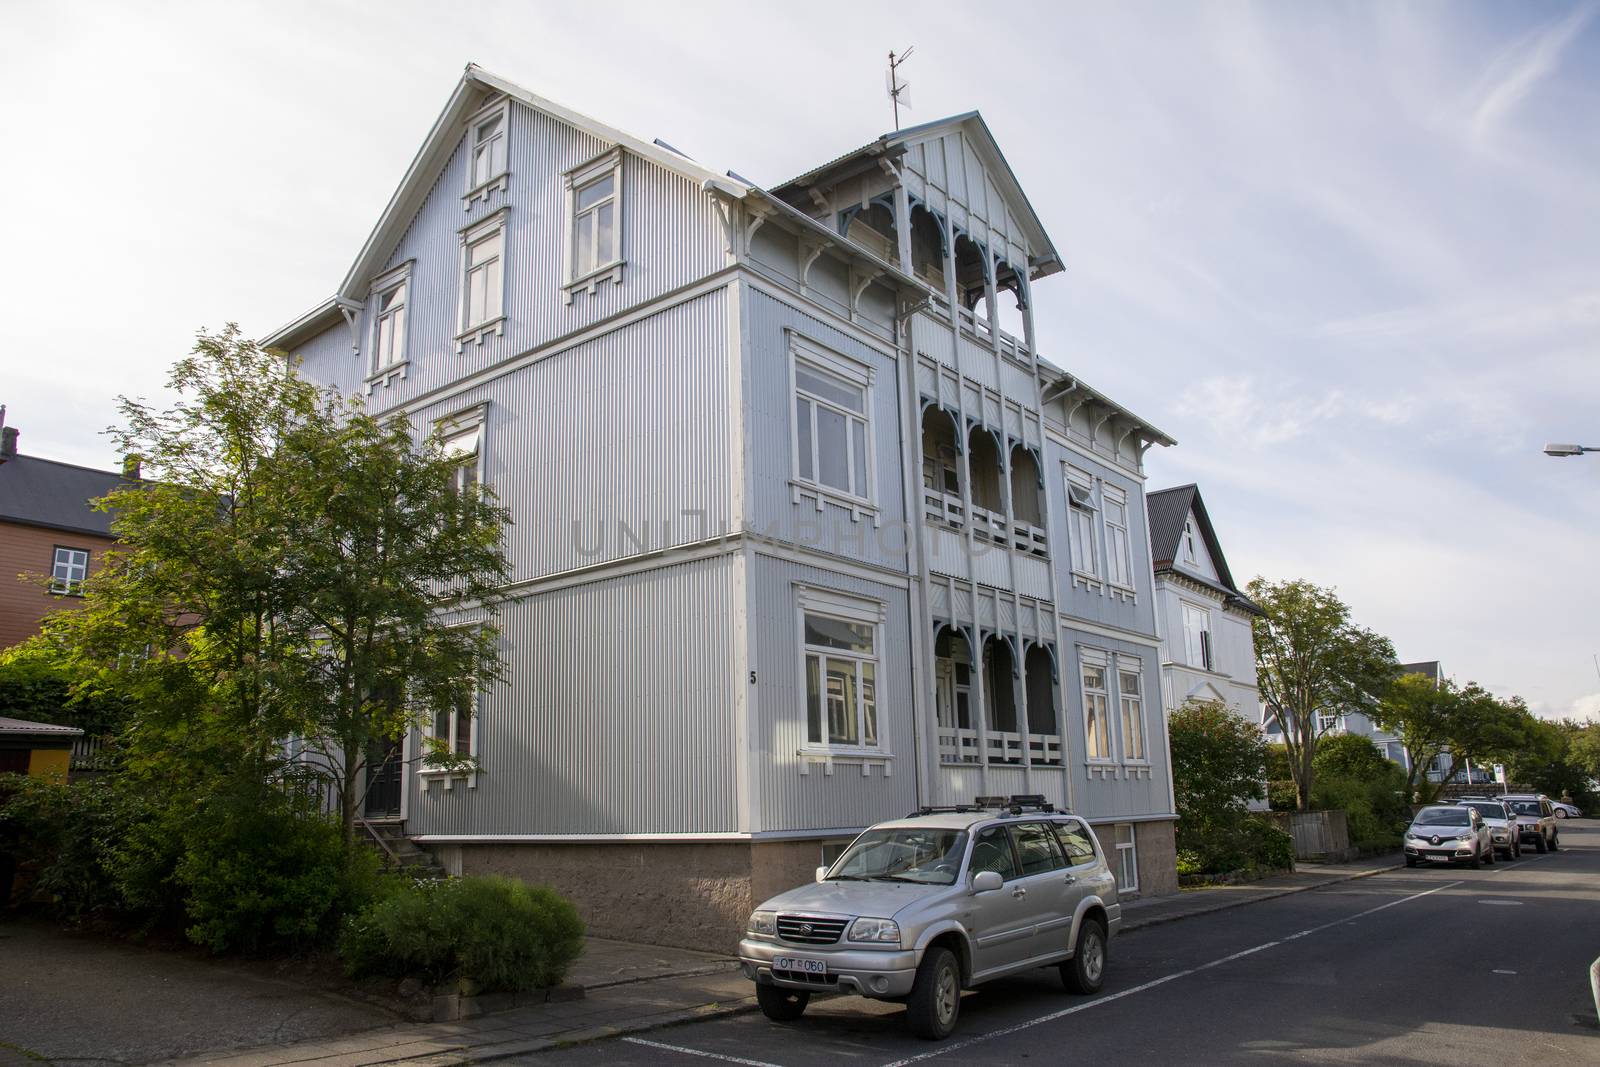 Reykjavik, Iceland, July 2019: view on the historical houses of Midstraeti, Reykjavik, Iceland